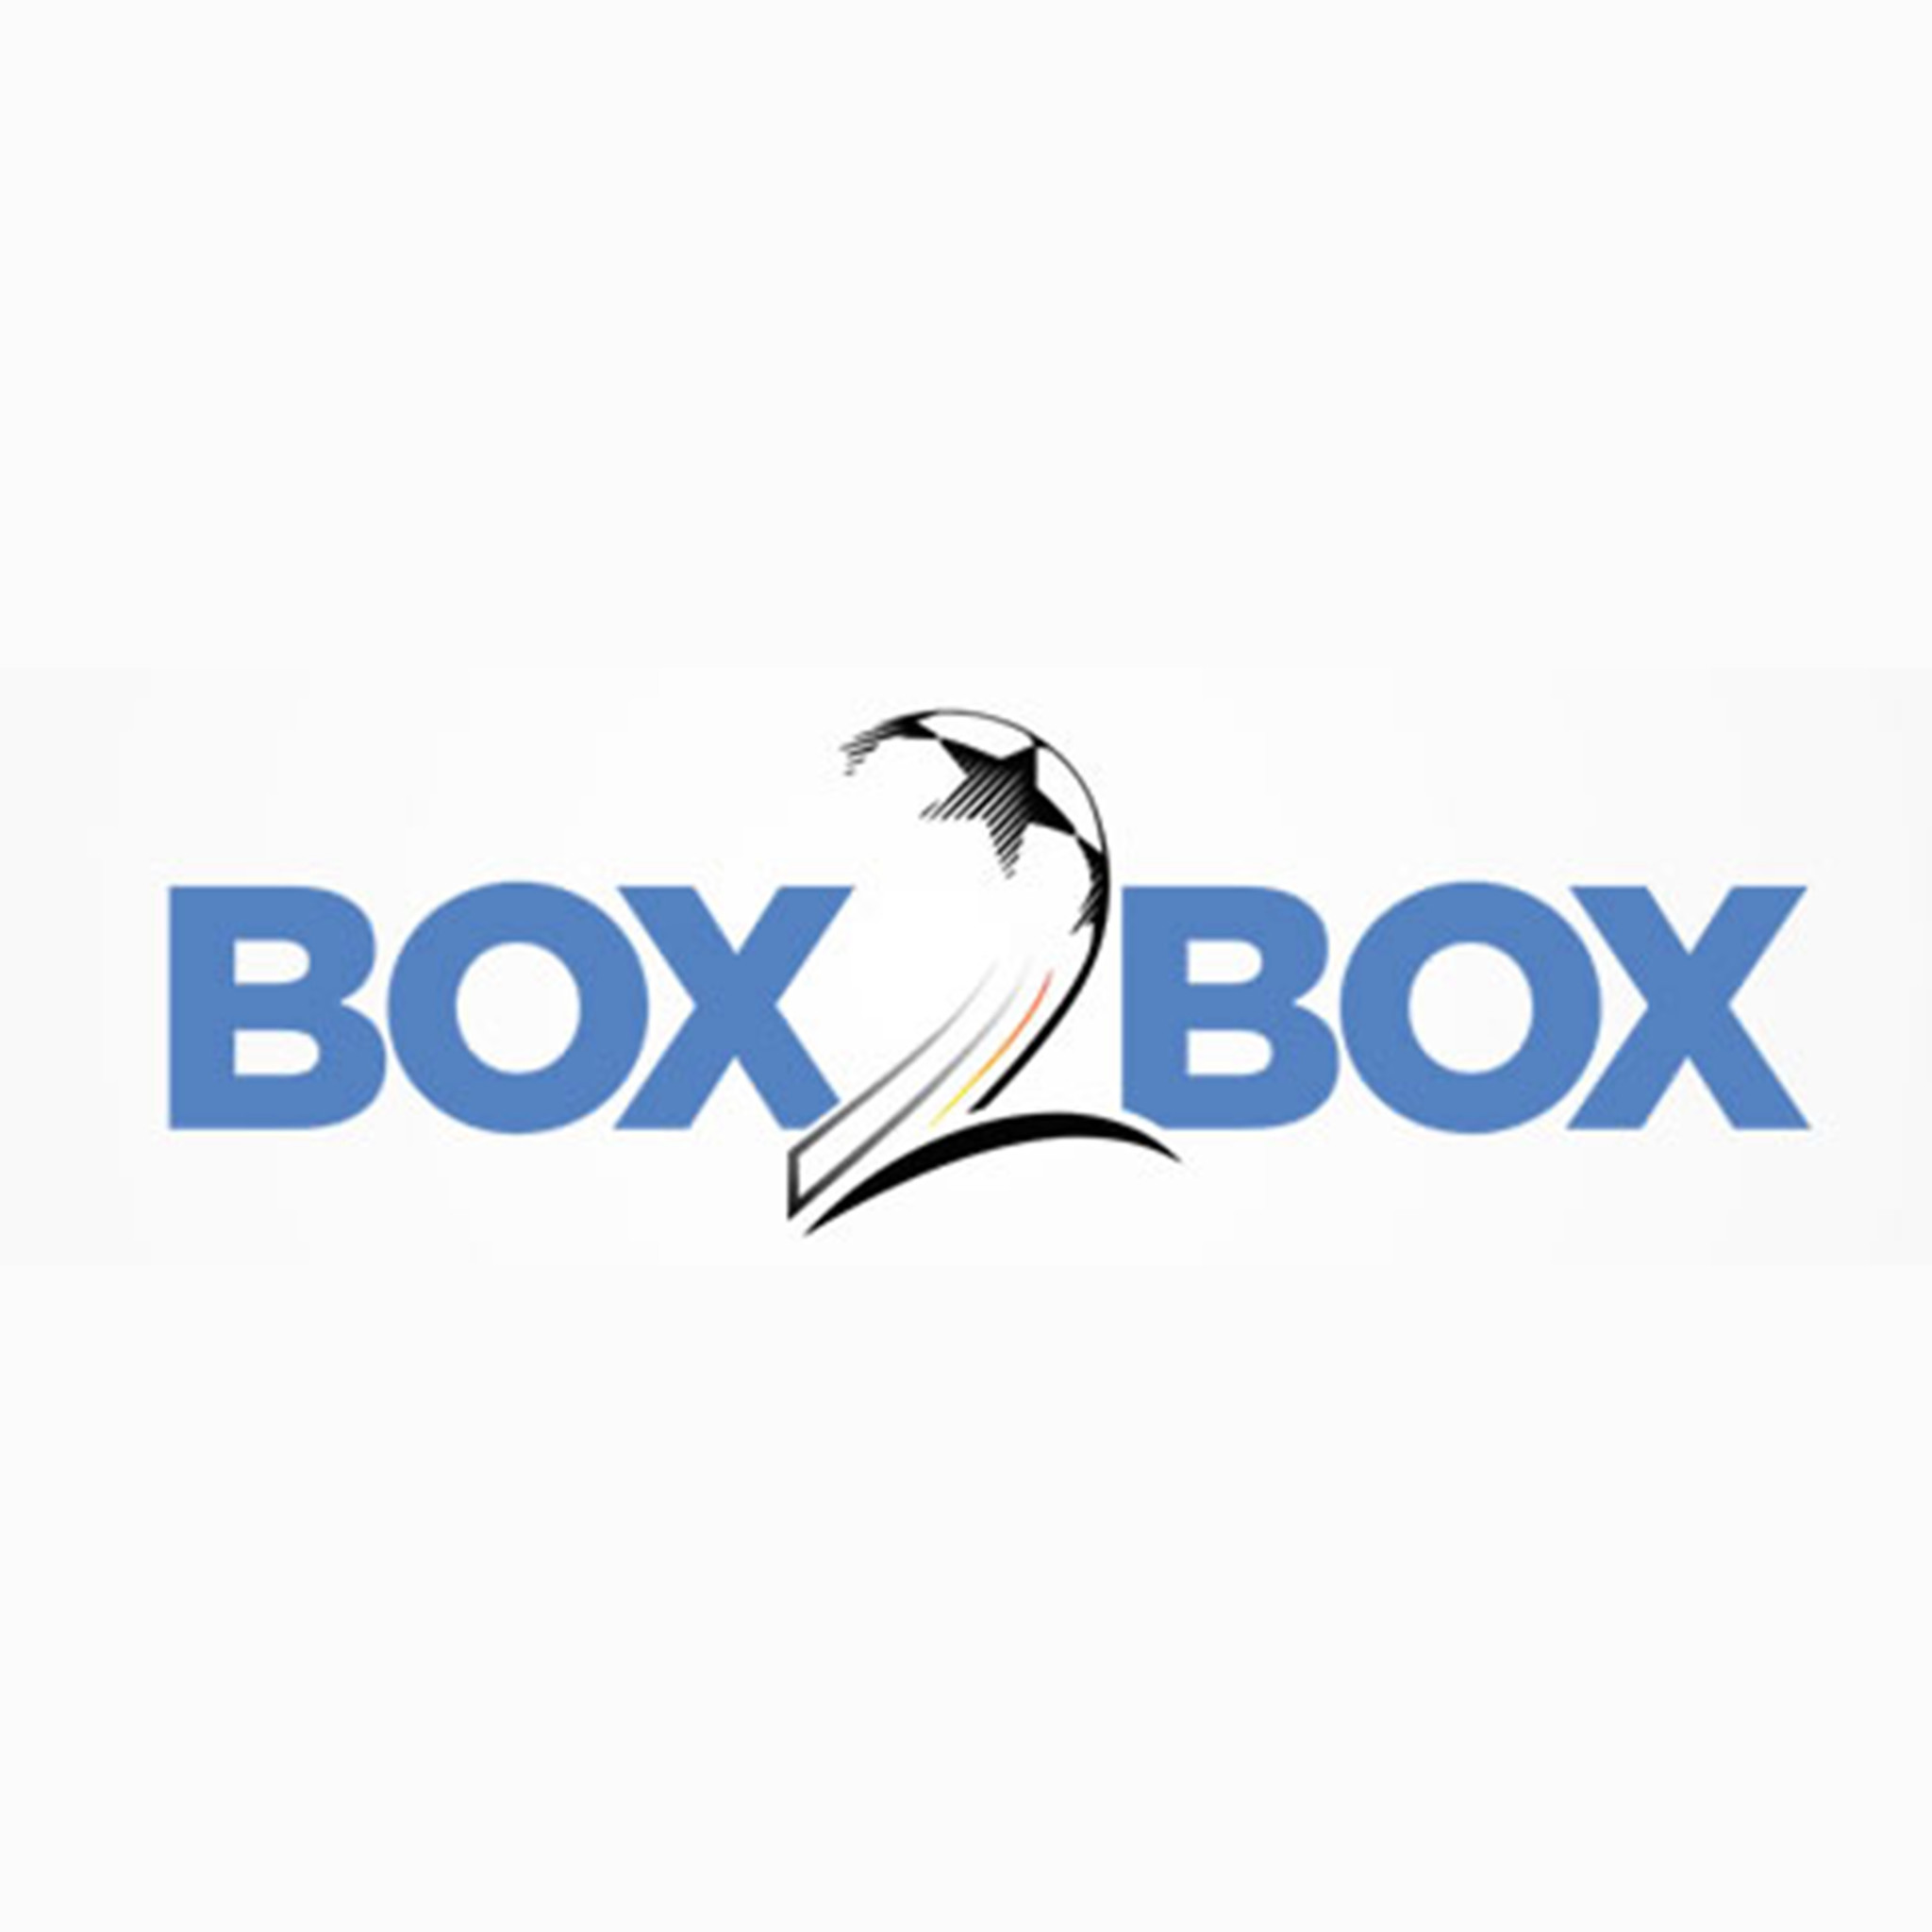 Box2Box, 20th November 2015